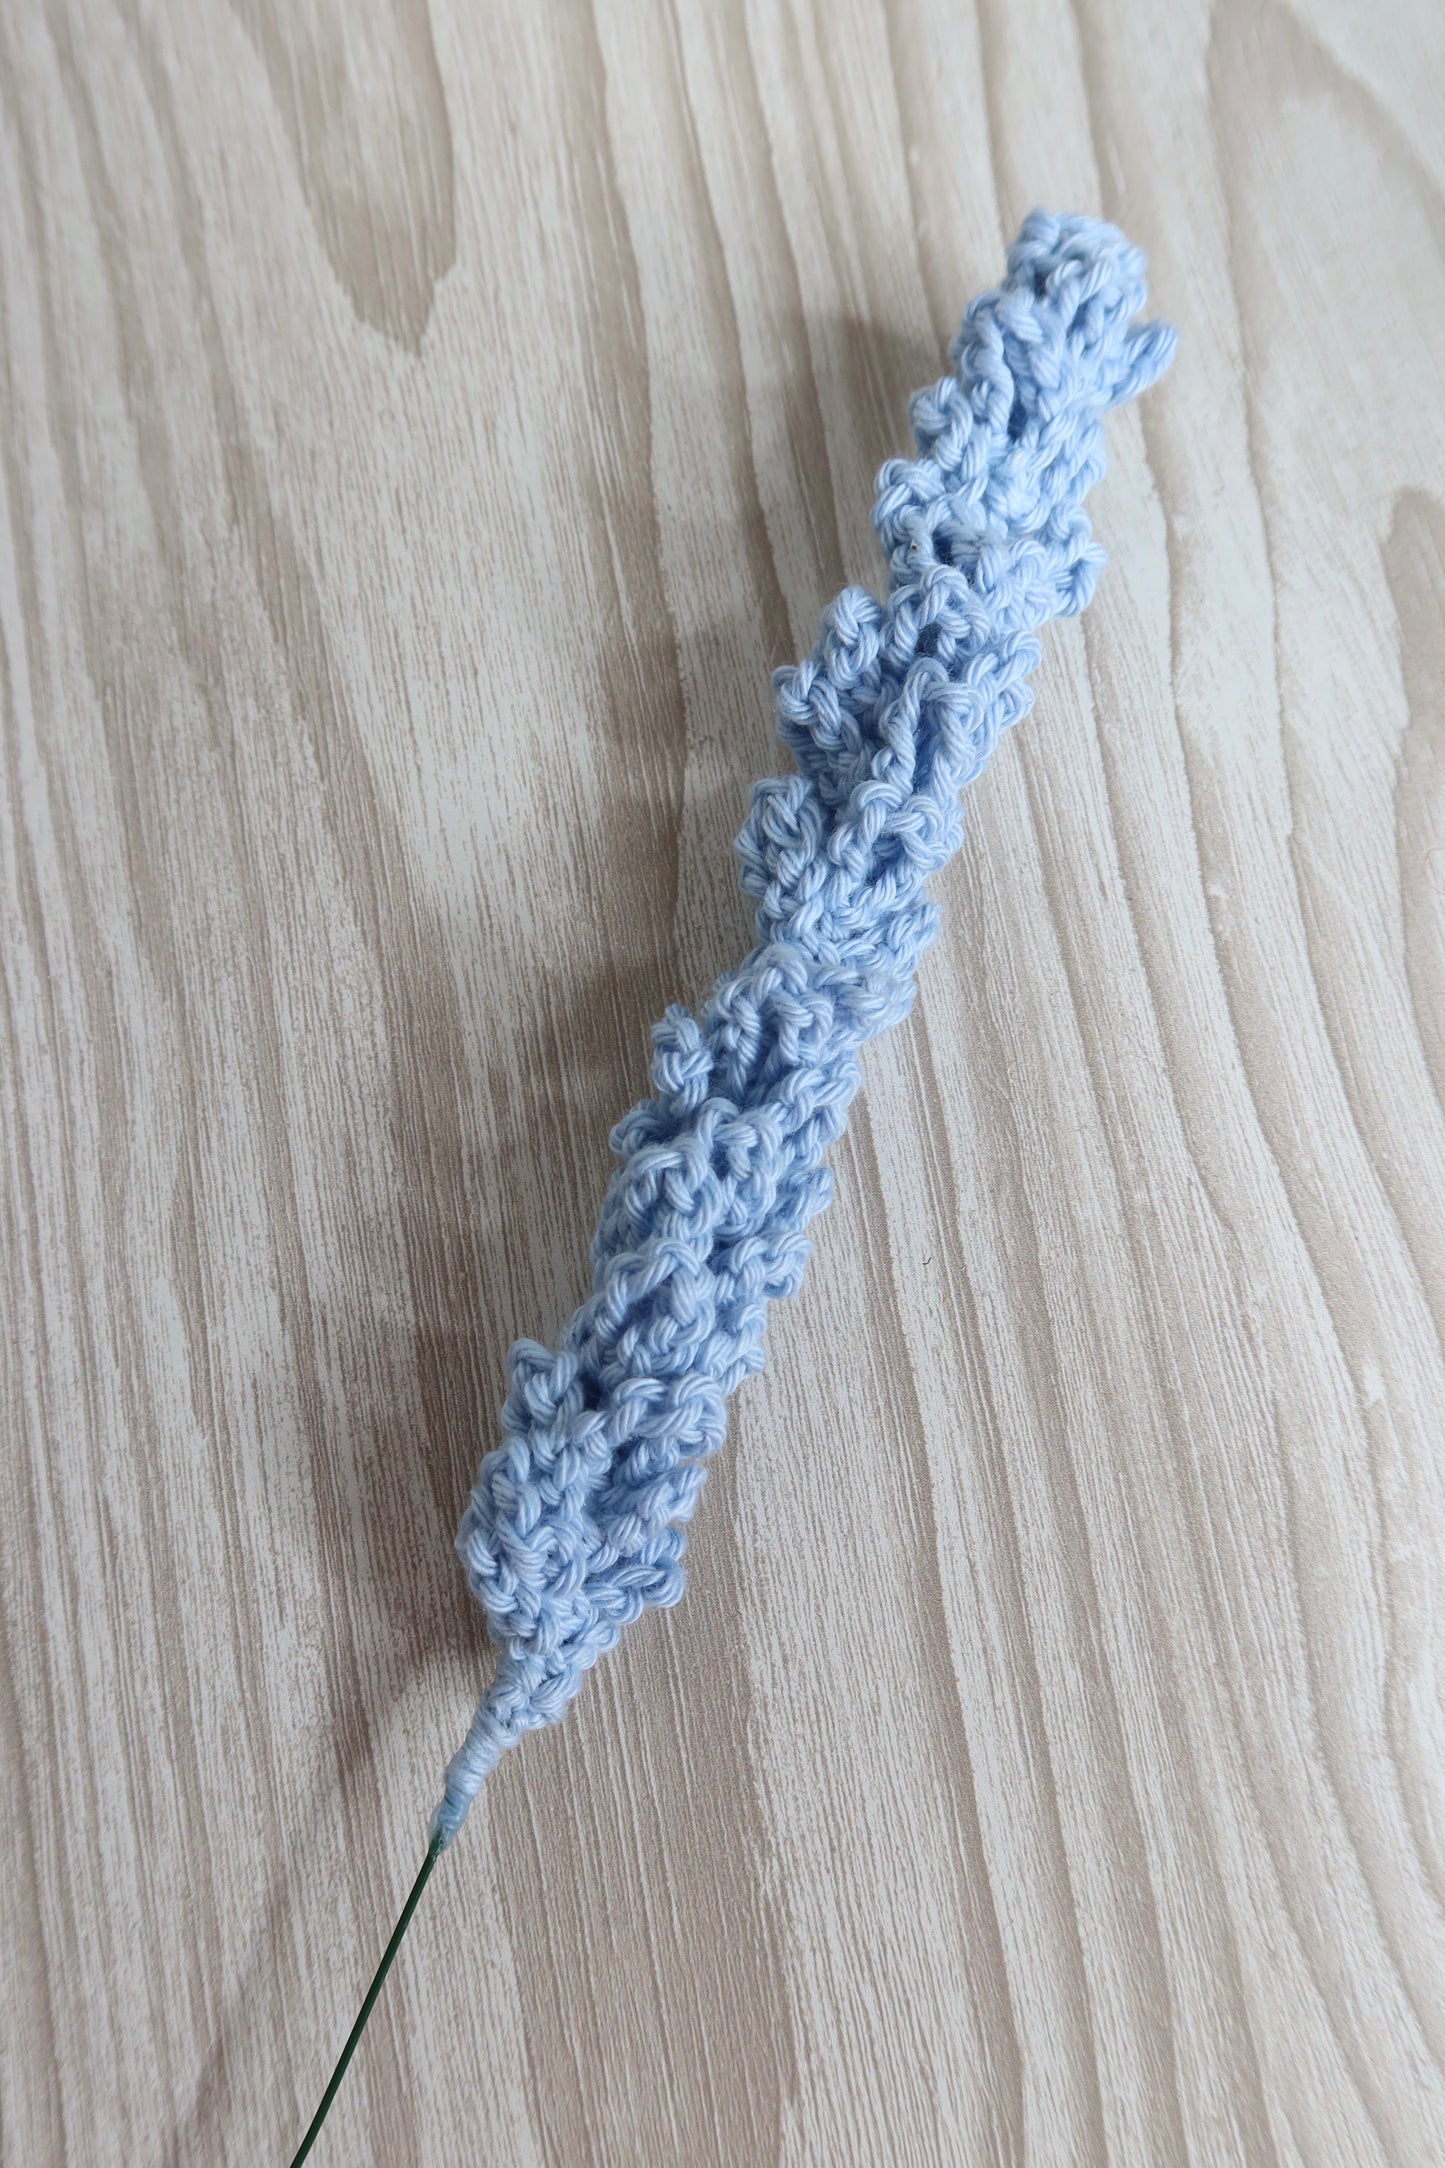 A single crochet lavender stem in sky blue